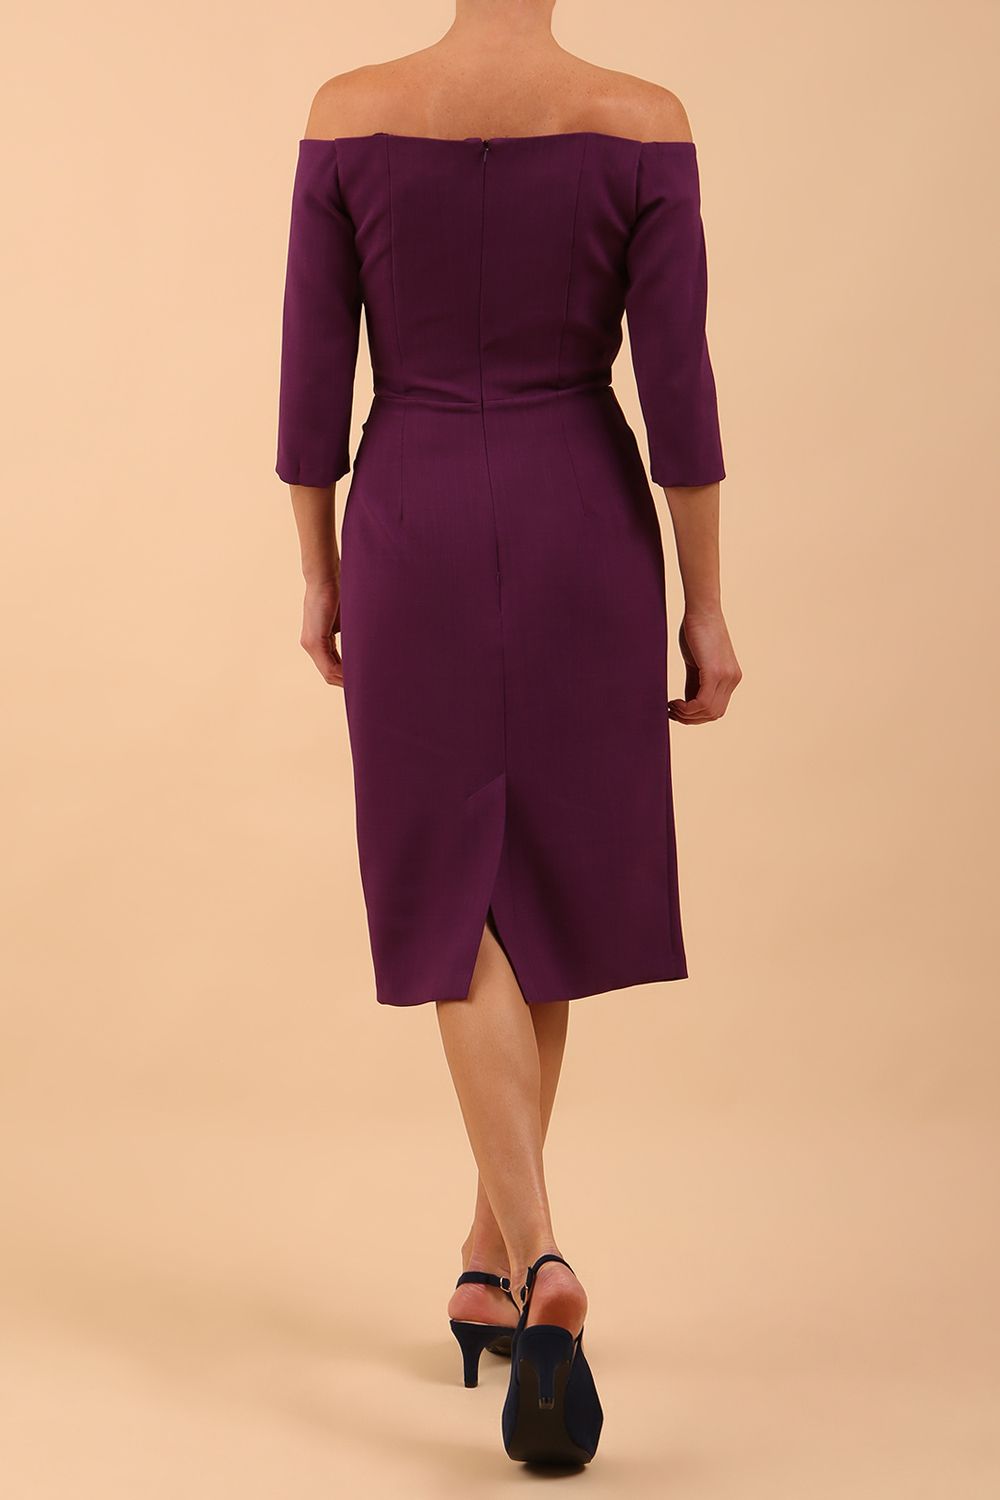 model is wearing diva catwalk lauren odd shoulder asymmetric neckline pencil dress with sleeves in imperial purple back